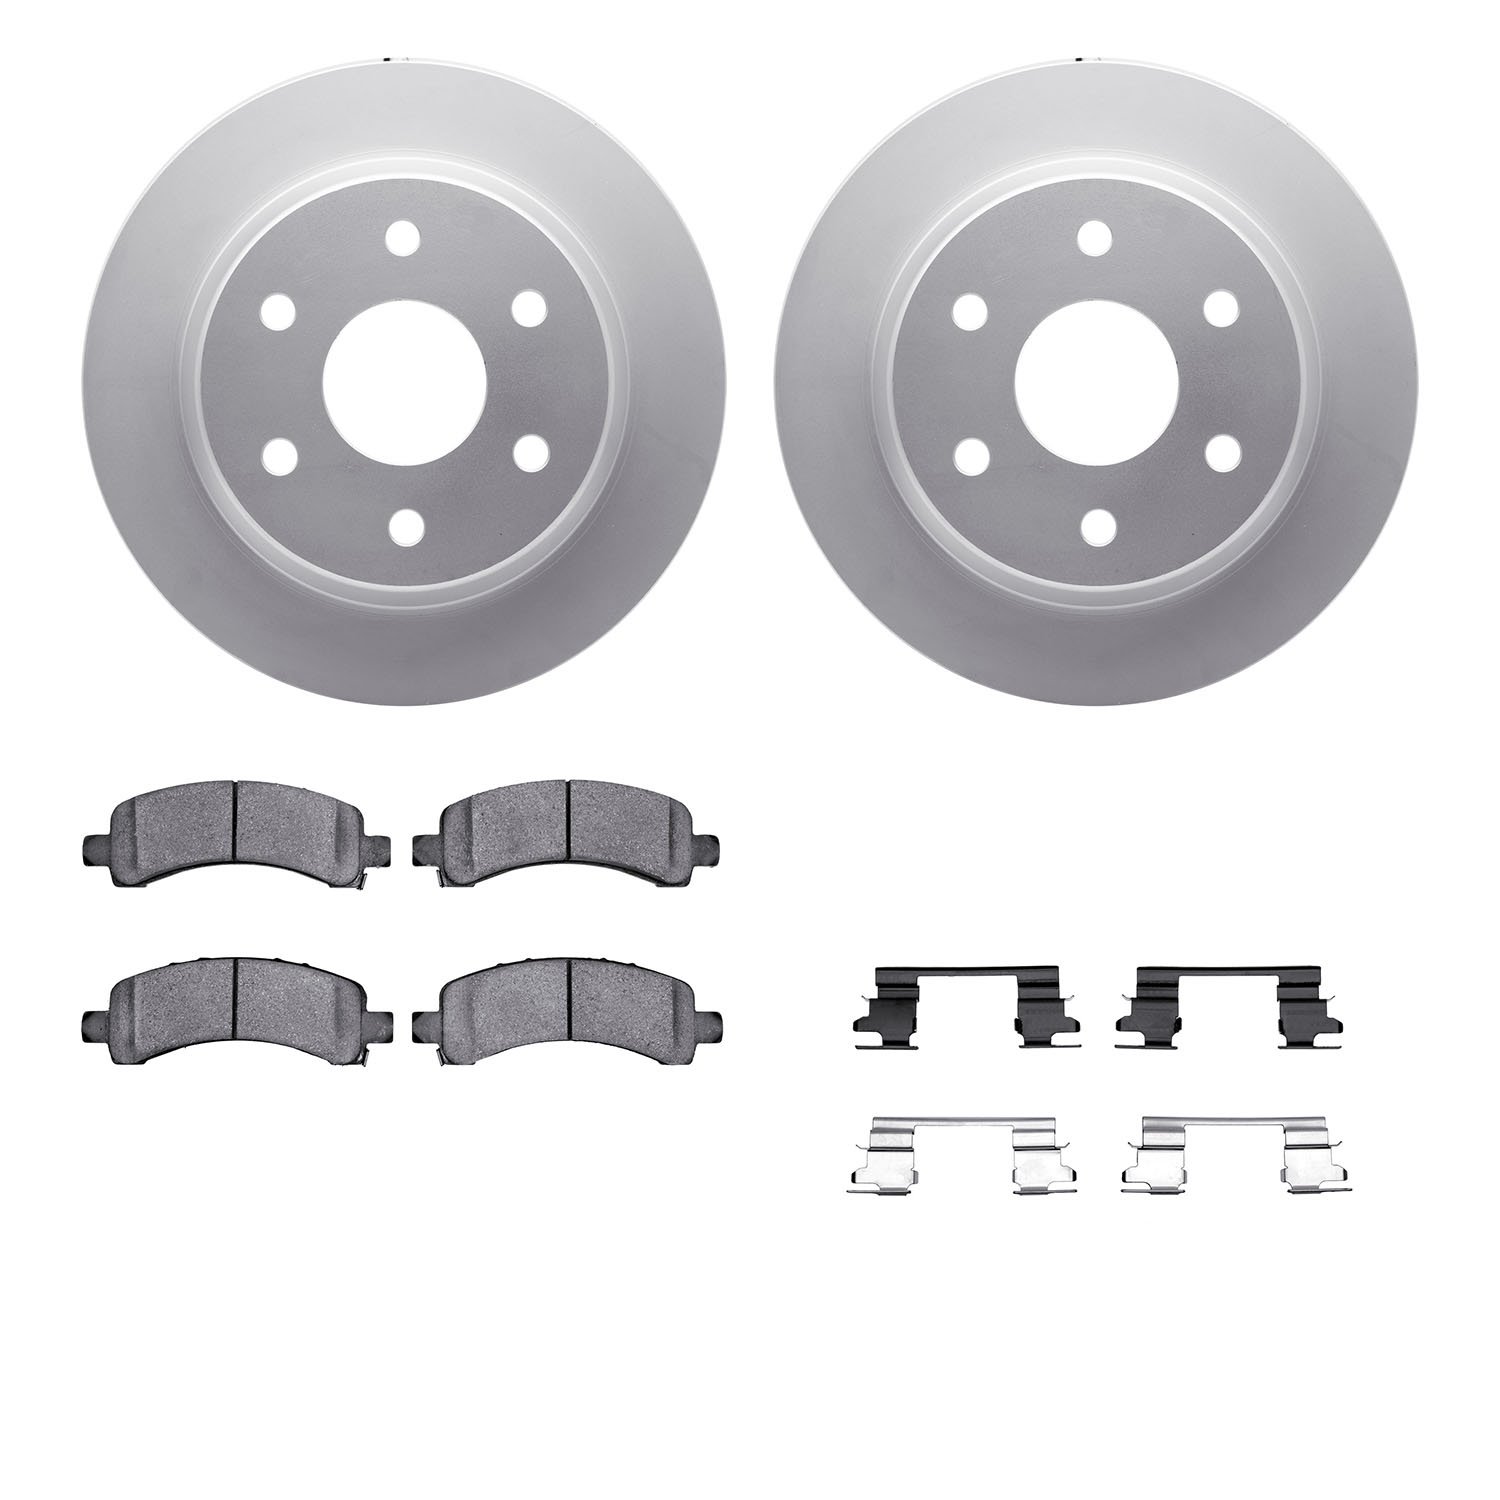 4412-48019 Geospec Brake Rotors with Ultimate-Duty Brake Pads & Hardware, 2002-2014 GM, Position: Rear